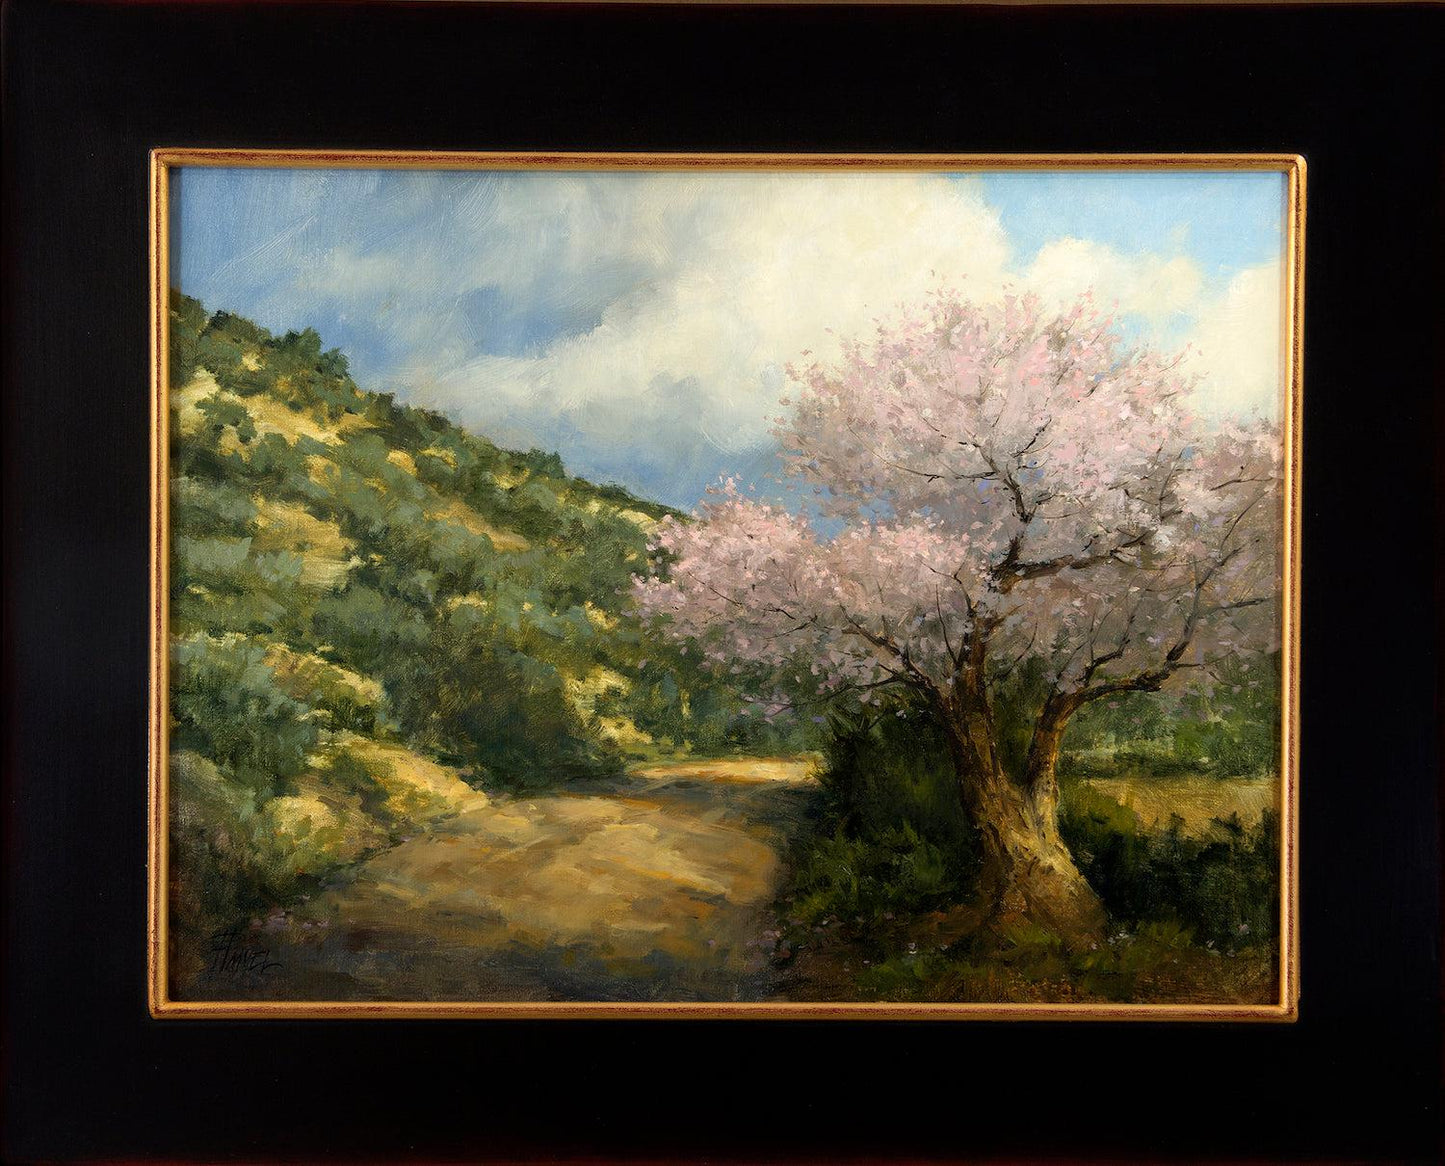 Pilar In Bloom-Painting-Peggy Immel-Sorrel Sky Gallery